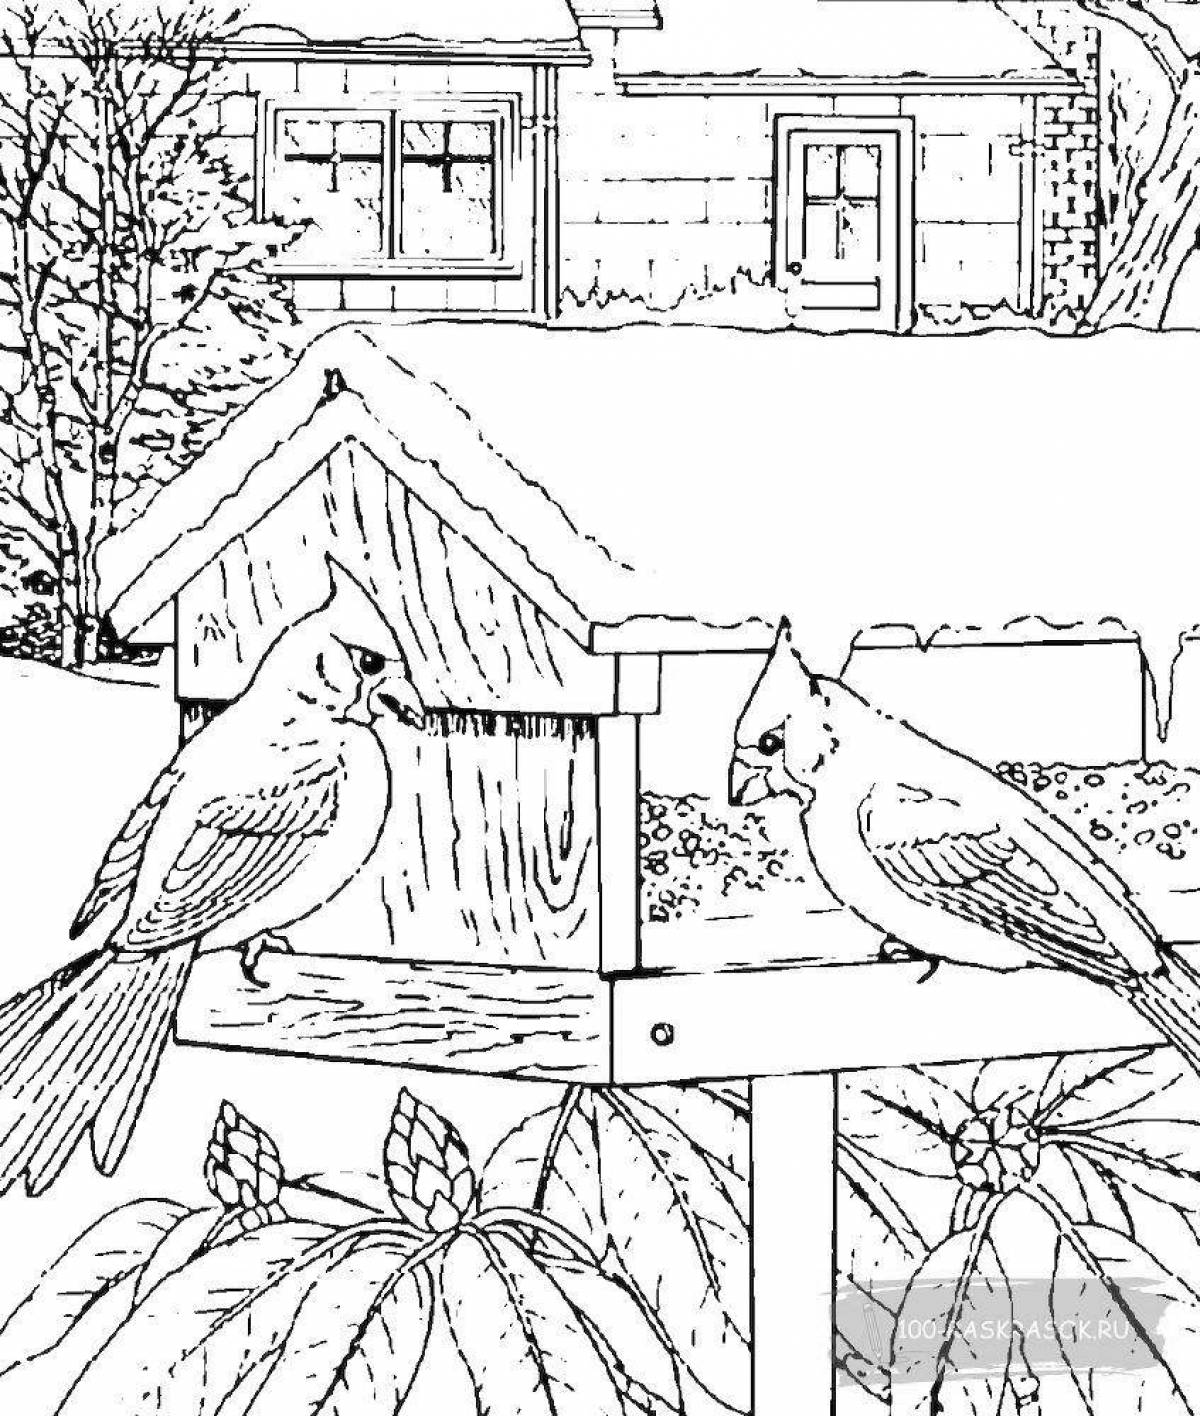 Calm down children feeding birds in the winter at the feeder